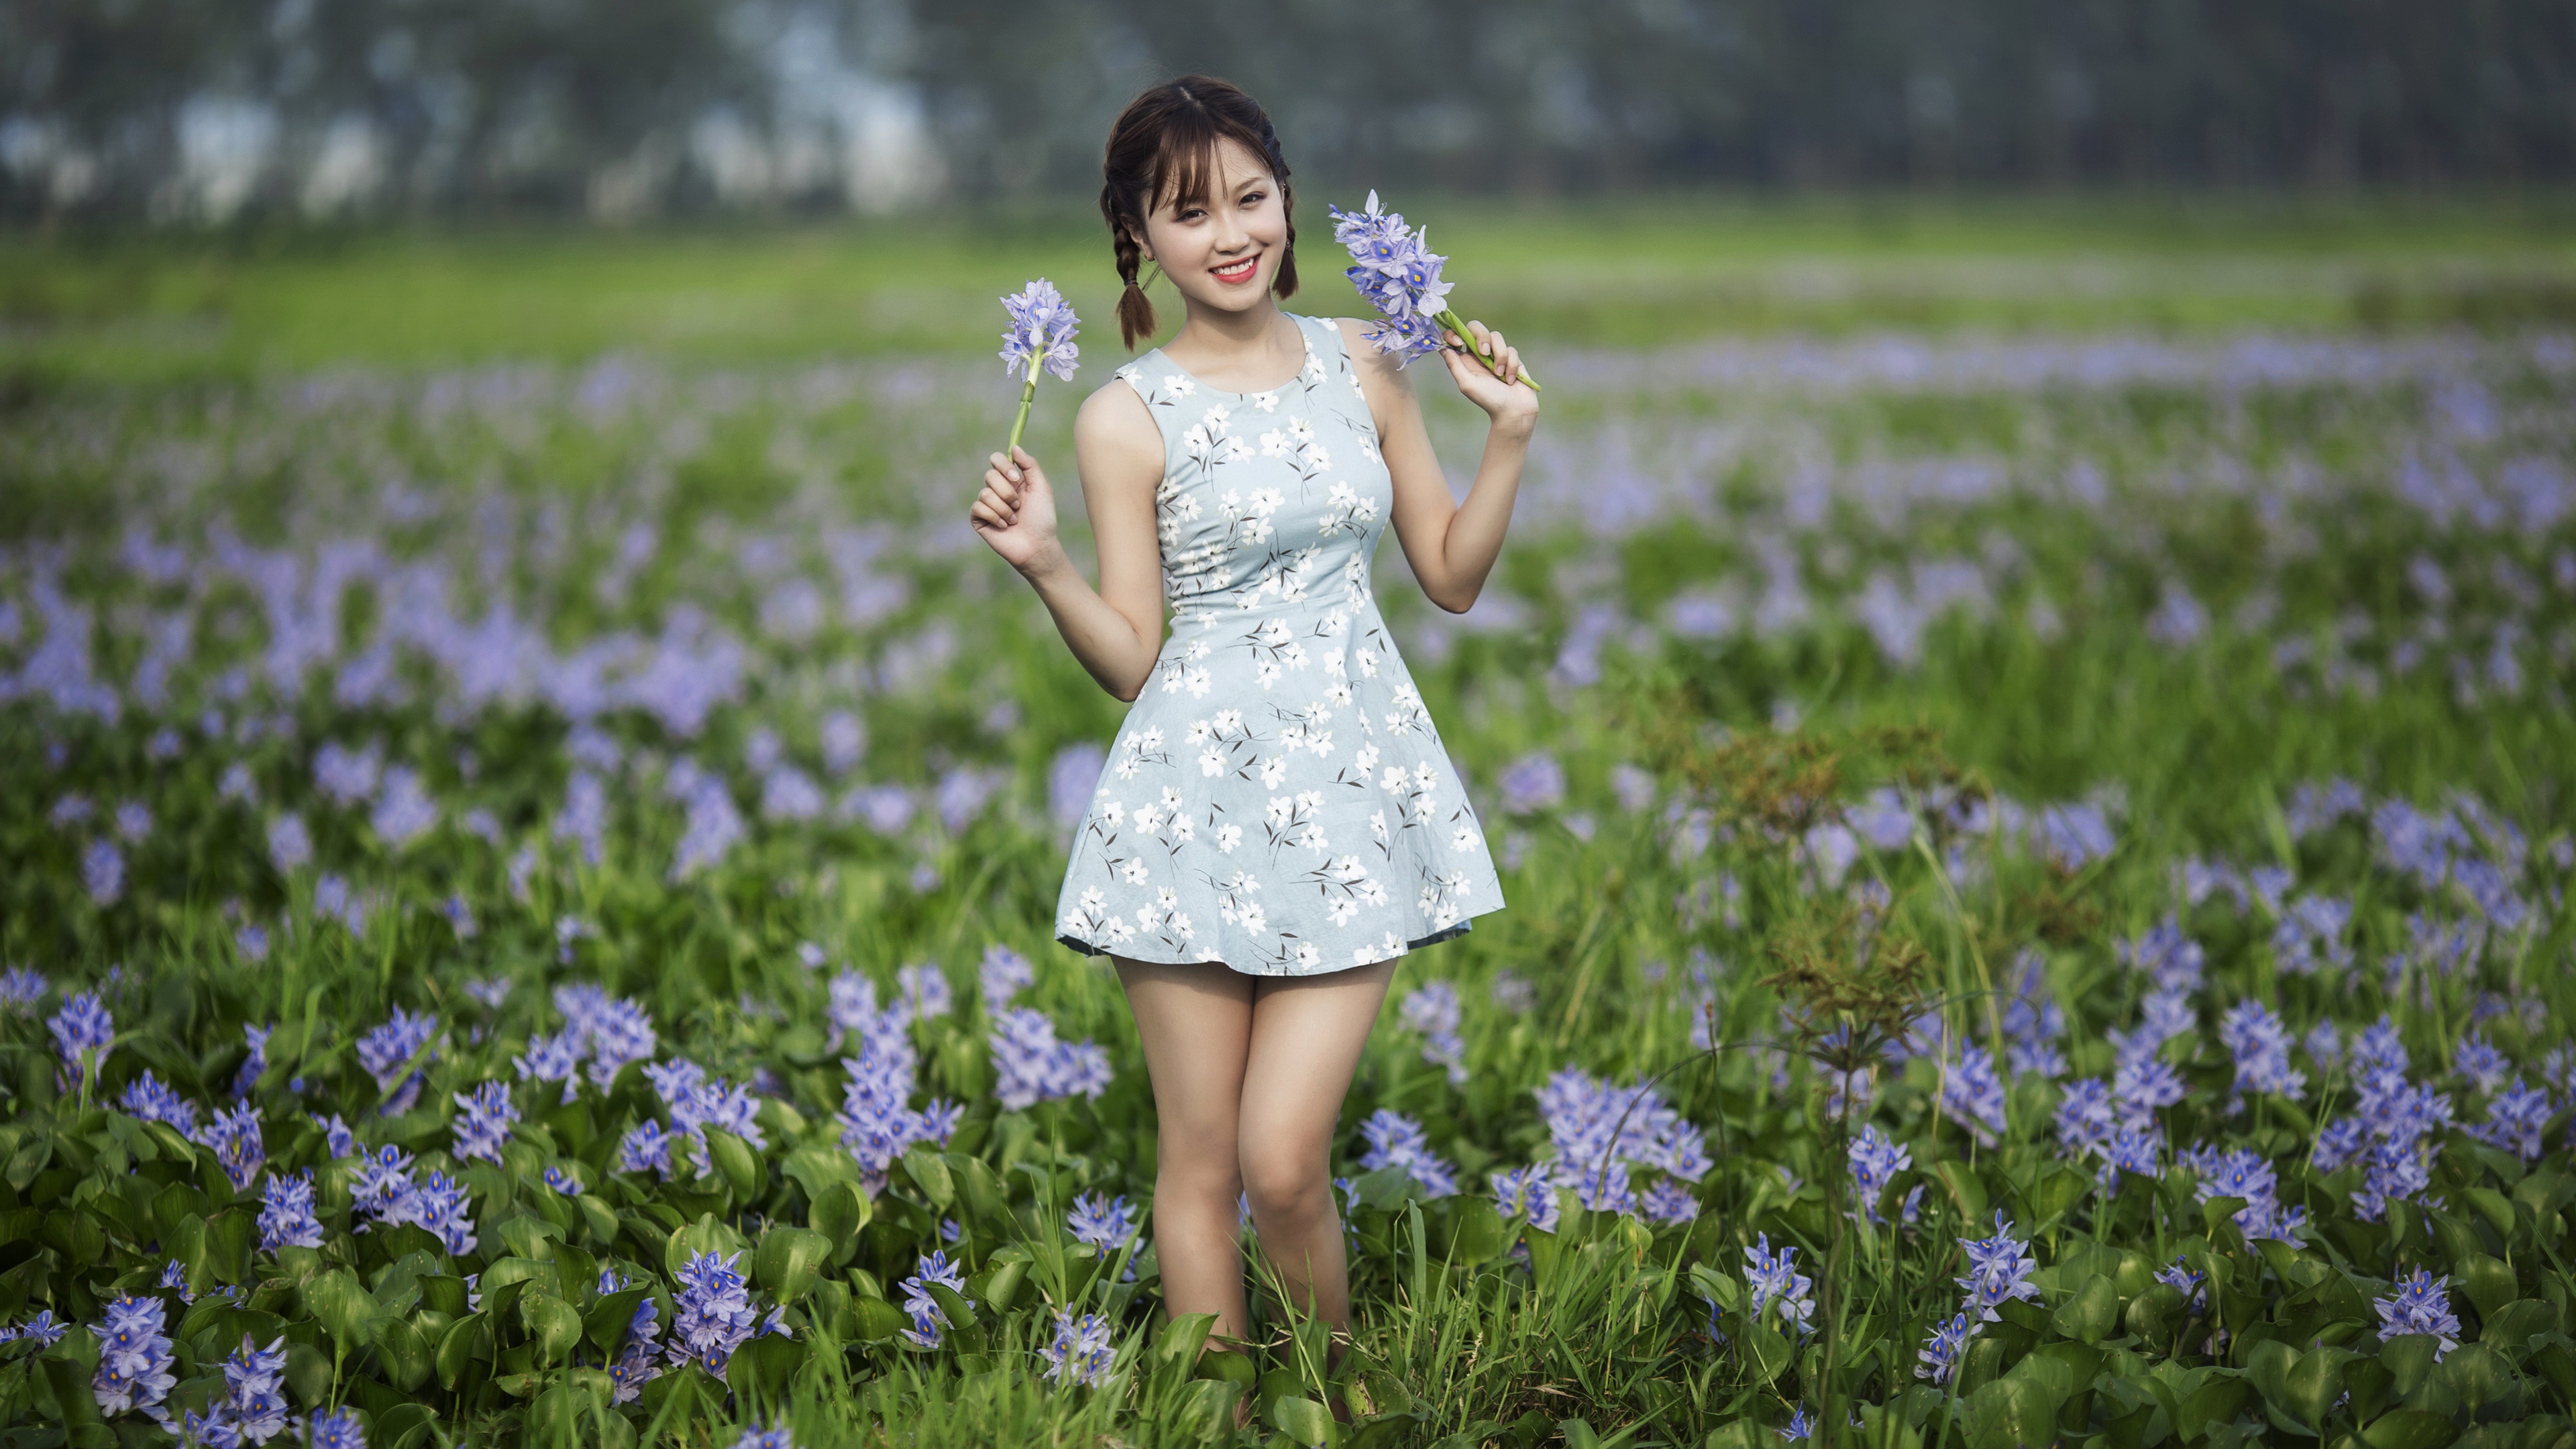 Asian Model Women Outdoors Women Outdoors Standing Flowers Plants Dress Smiling Flower Dress Field B 3840x2160